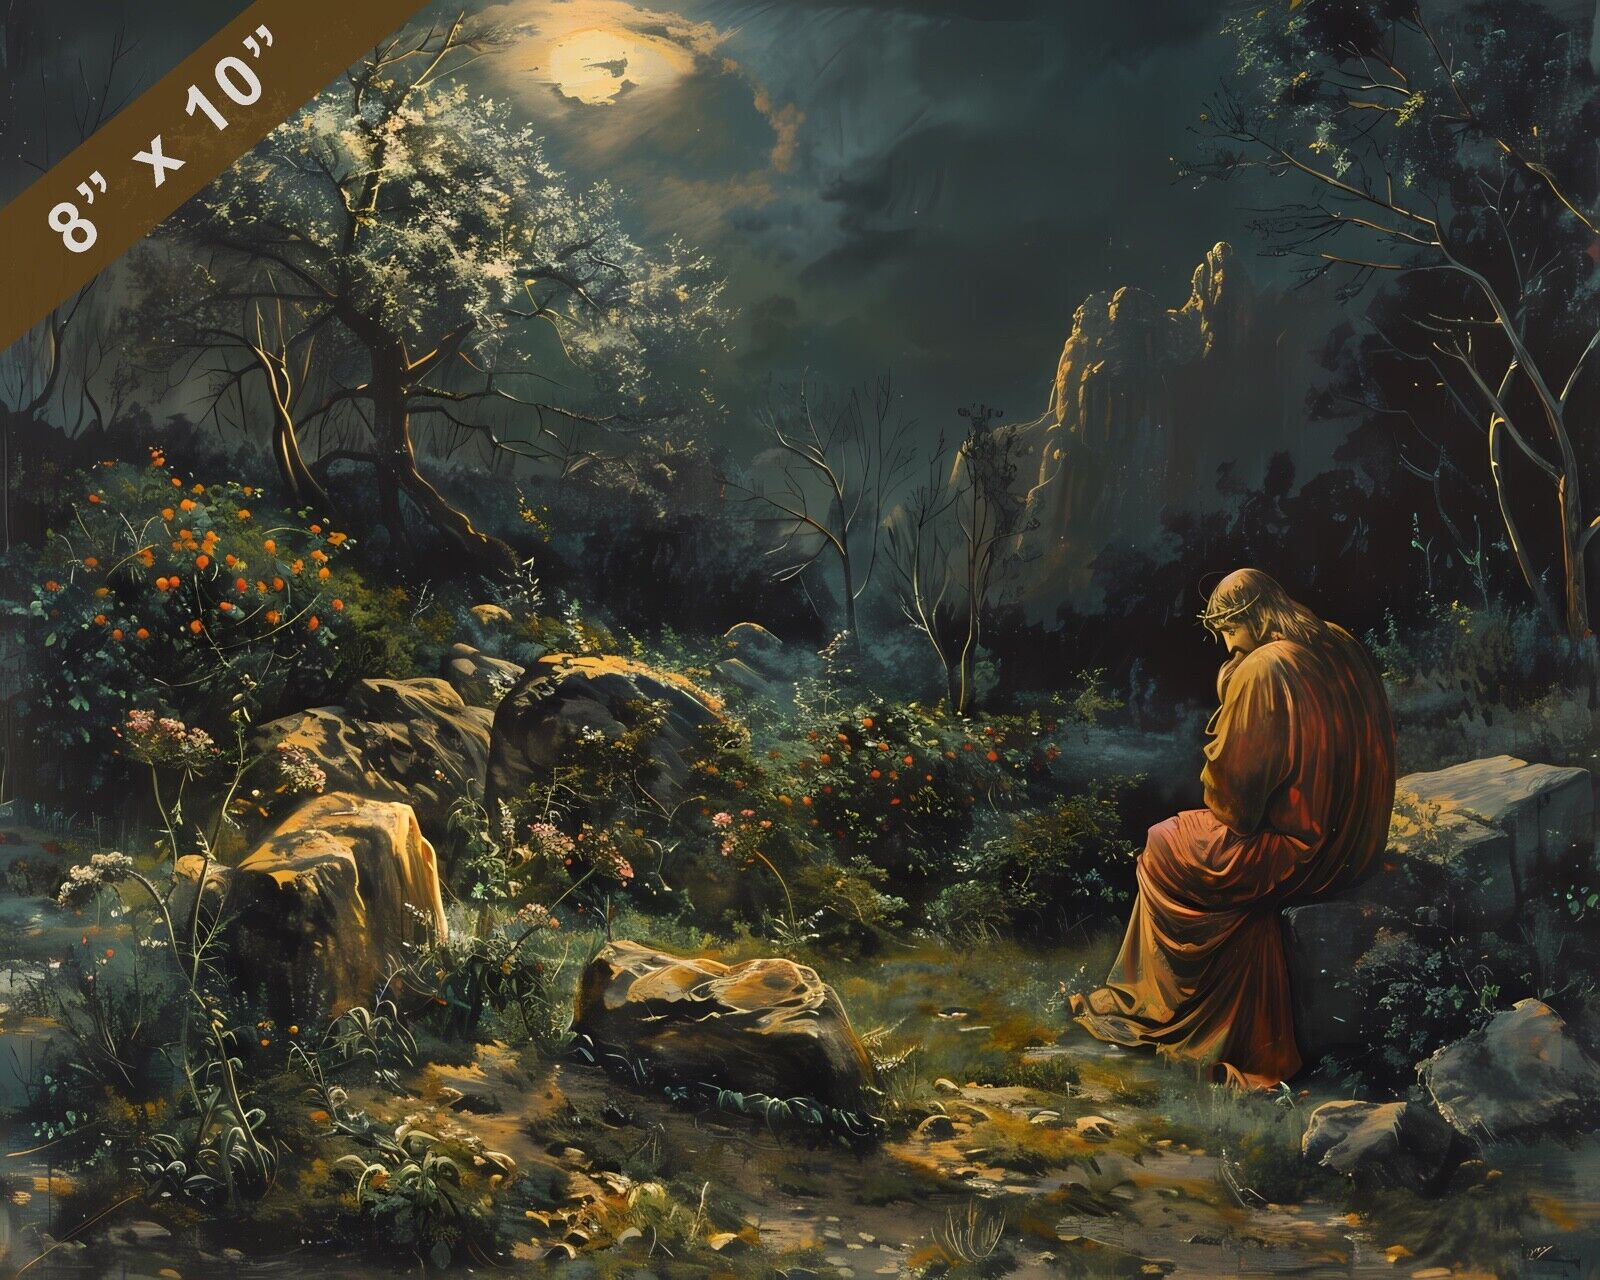 Jesus Christ in the Garden of Gethsemane